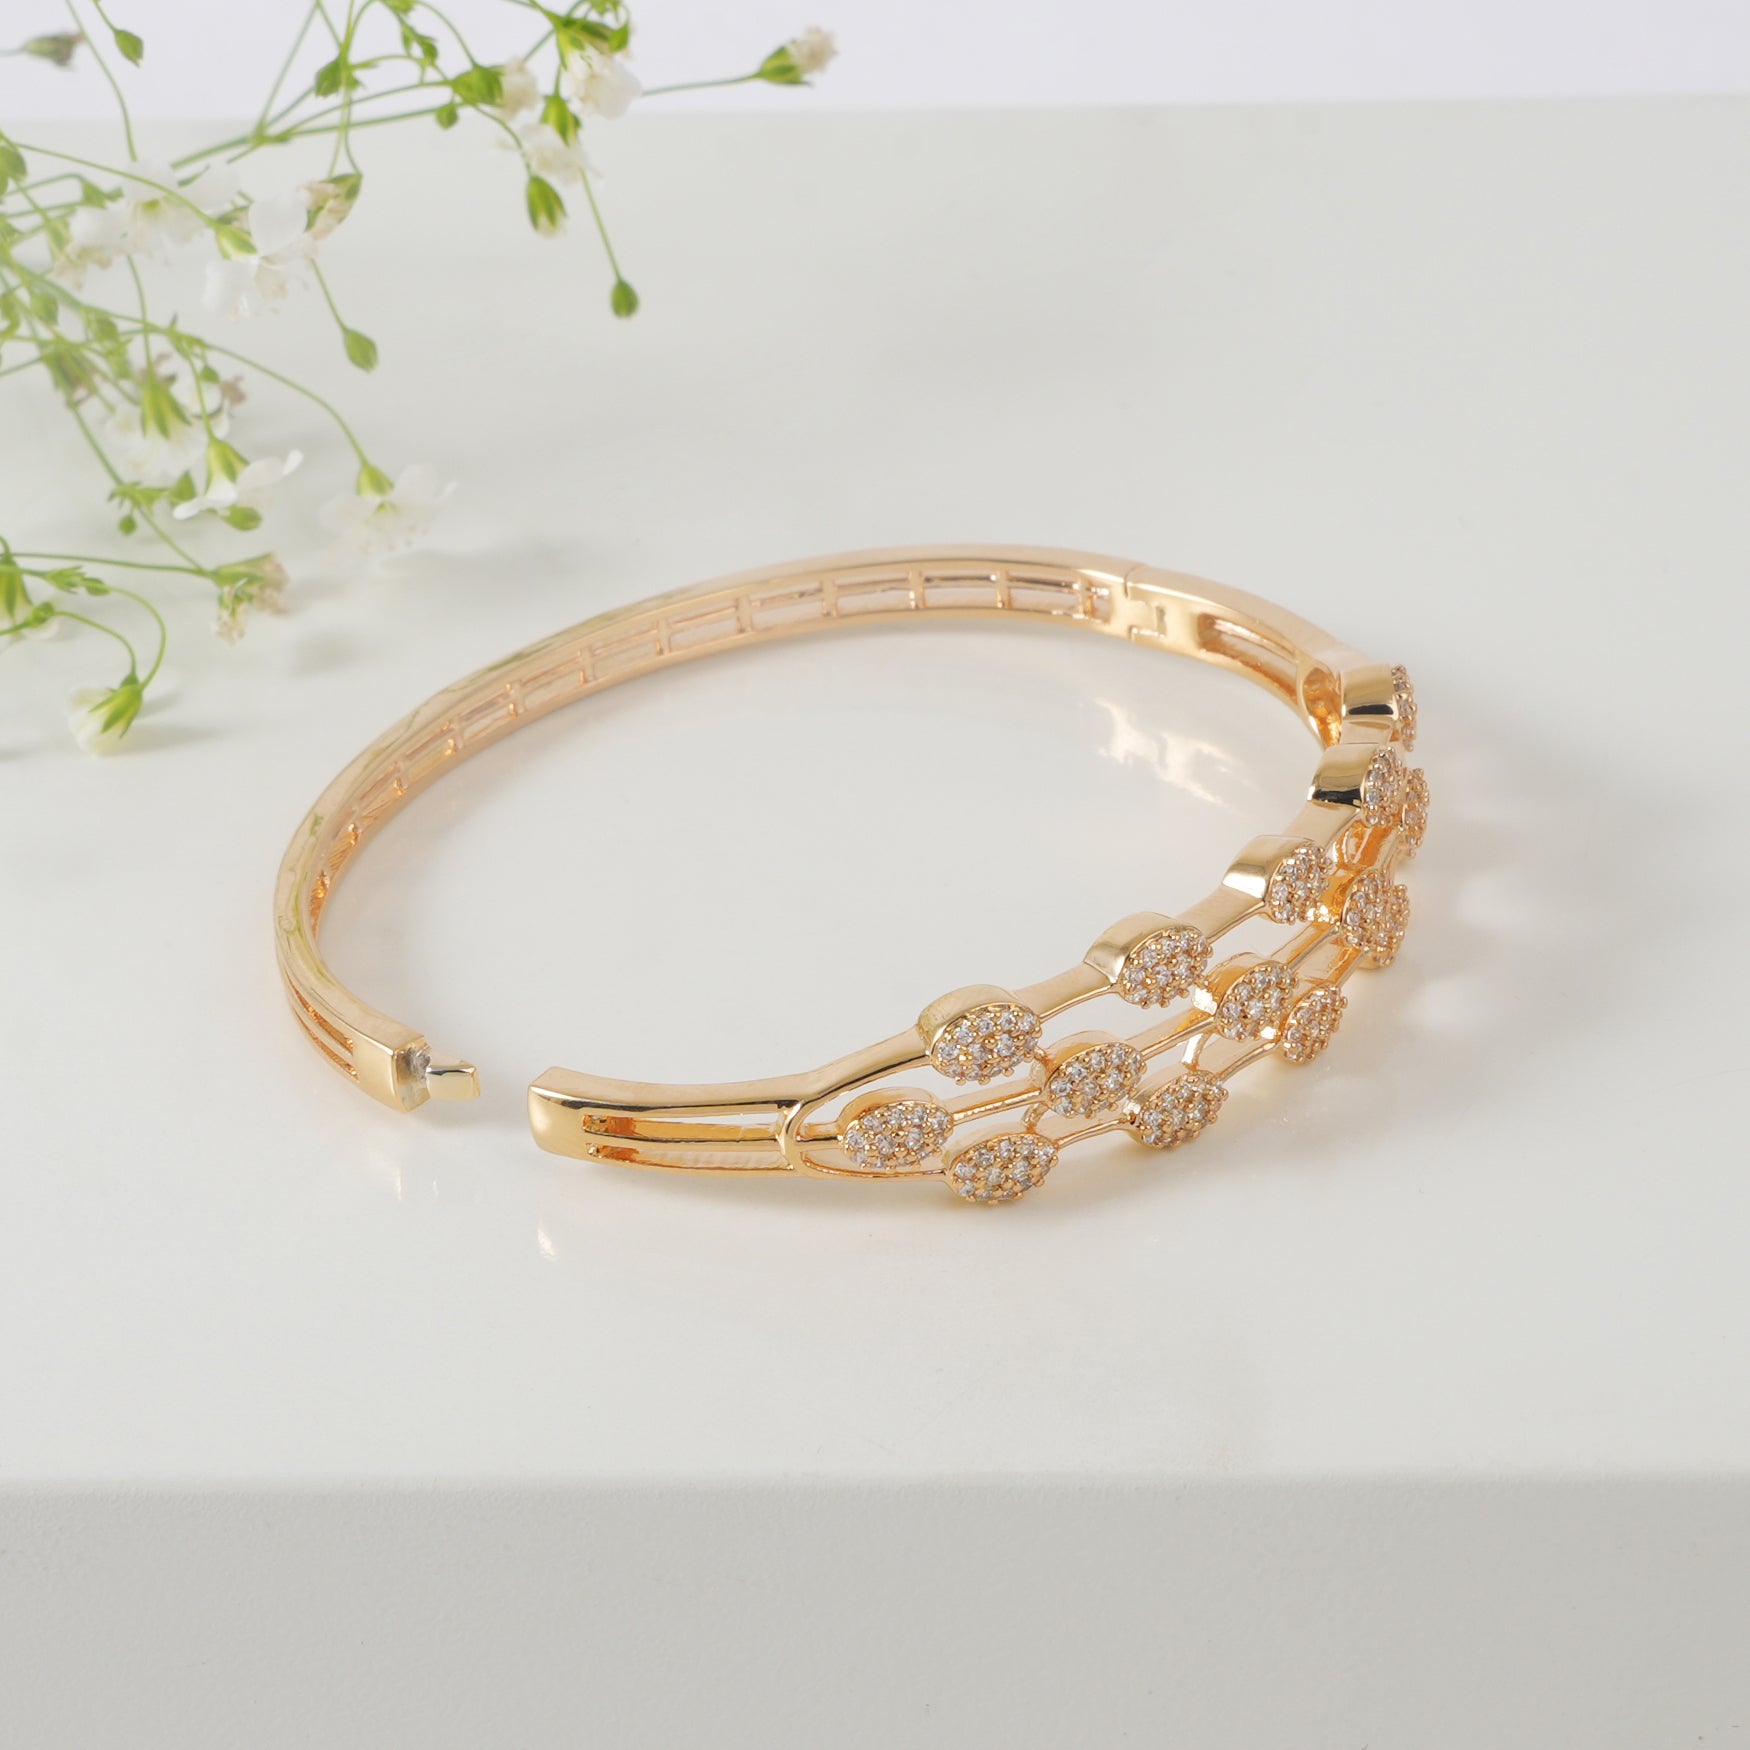 Stunning diamond studded cuff bracelet